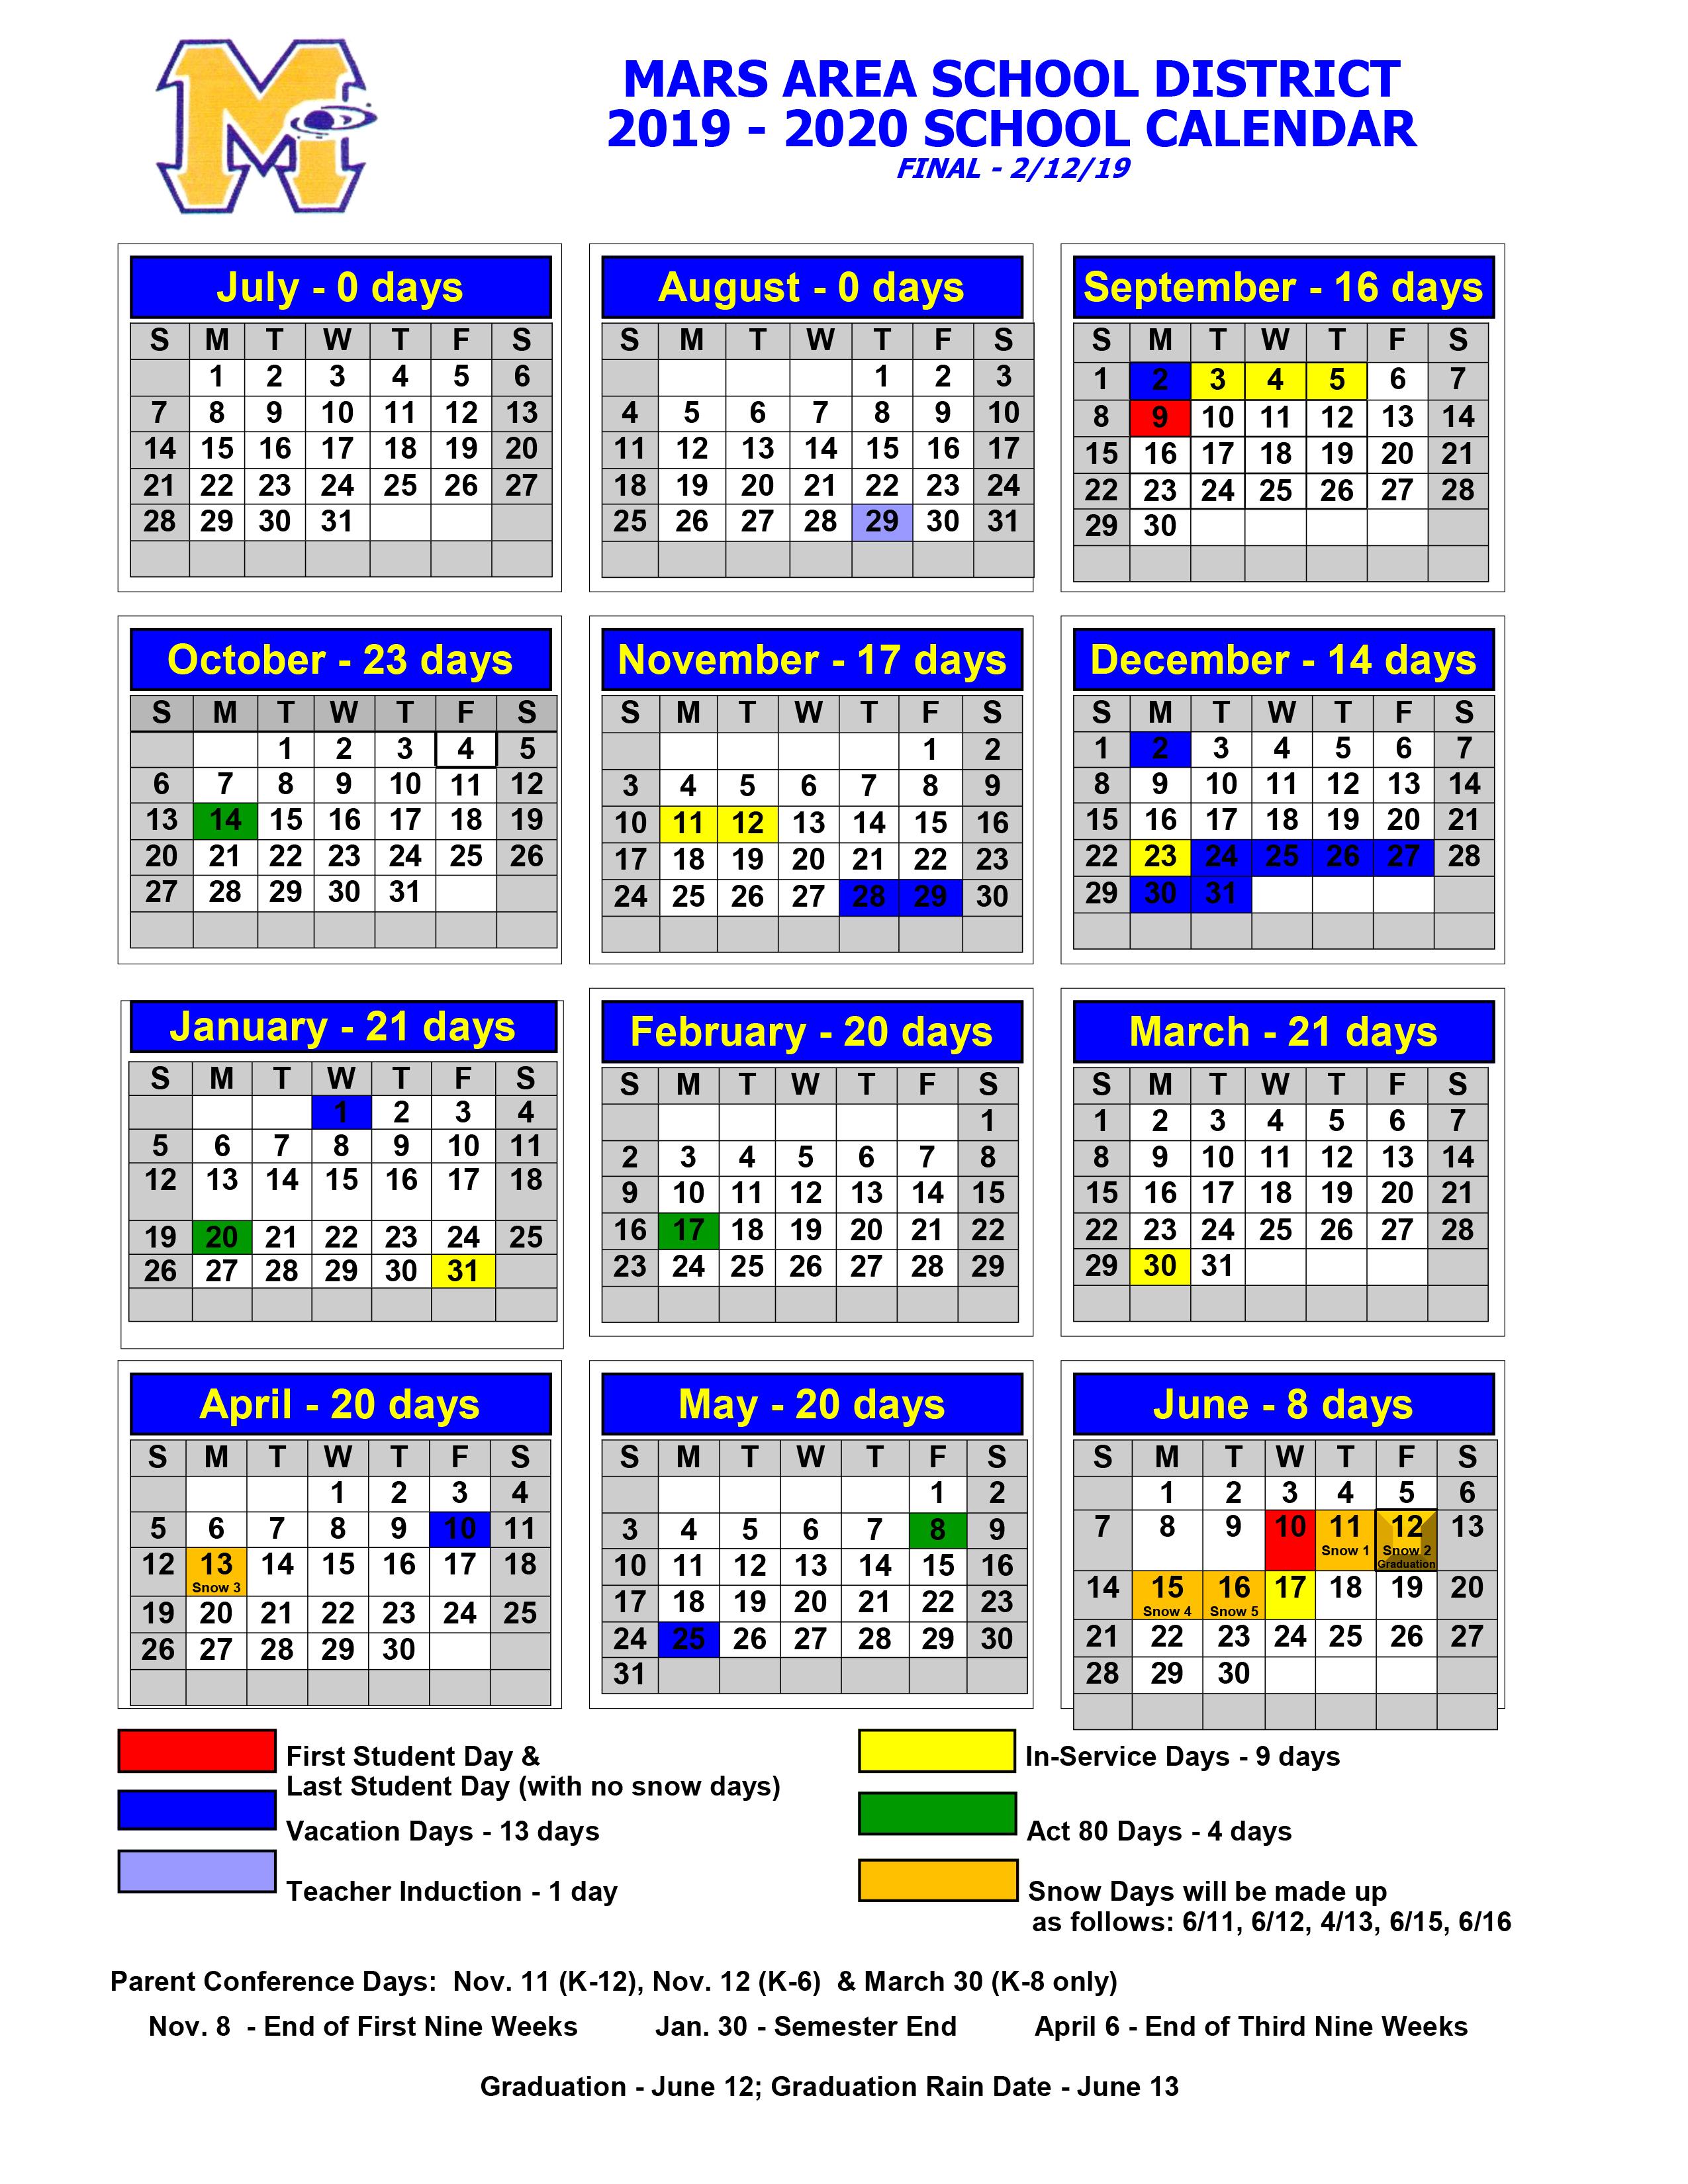 Mars Area School District 2019-2020 District Calendar